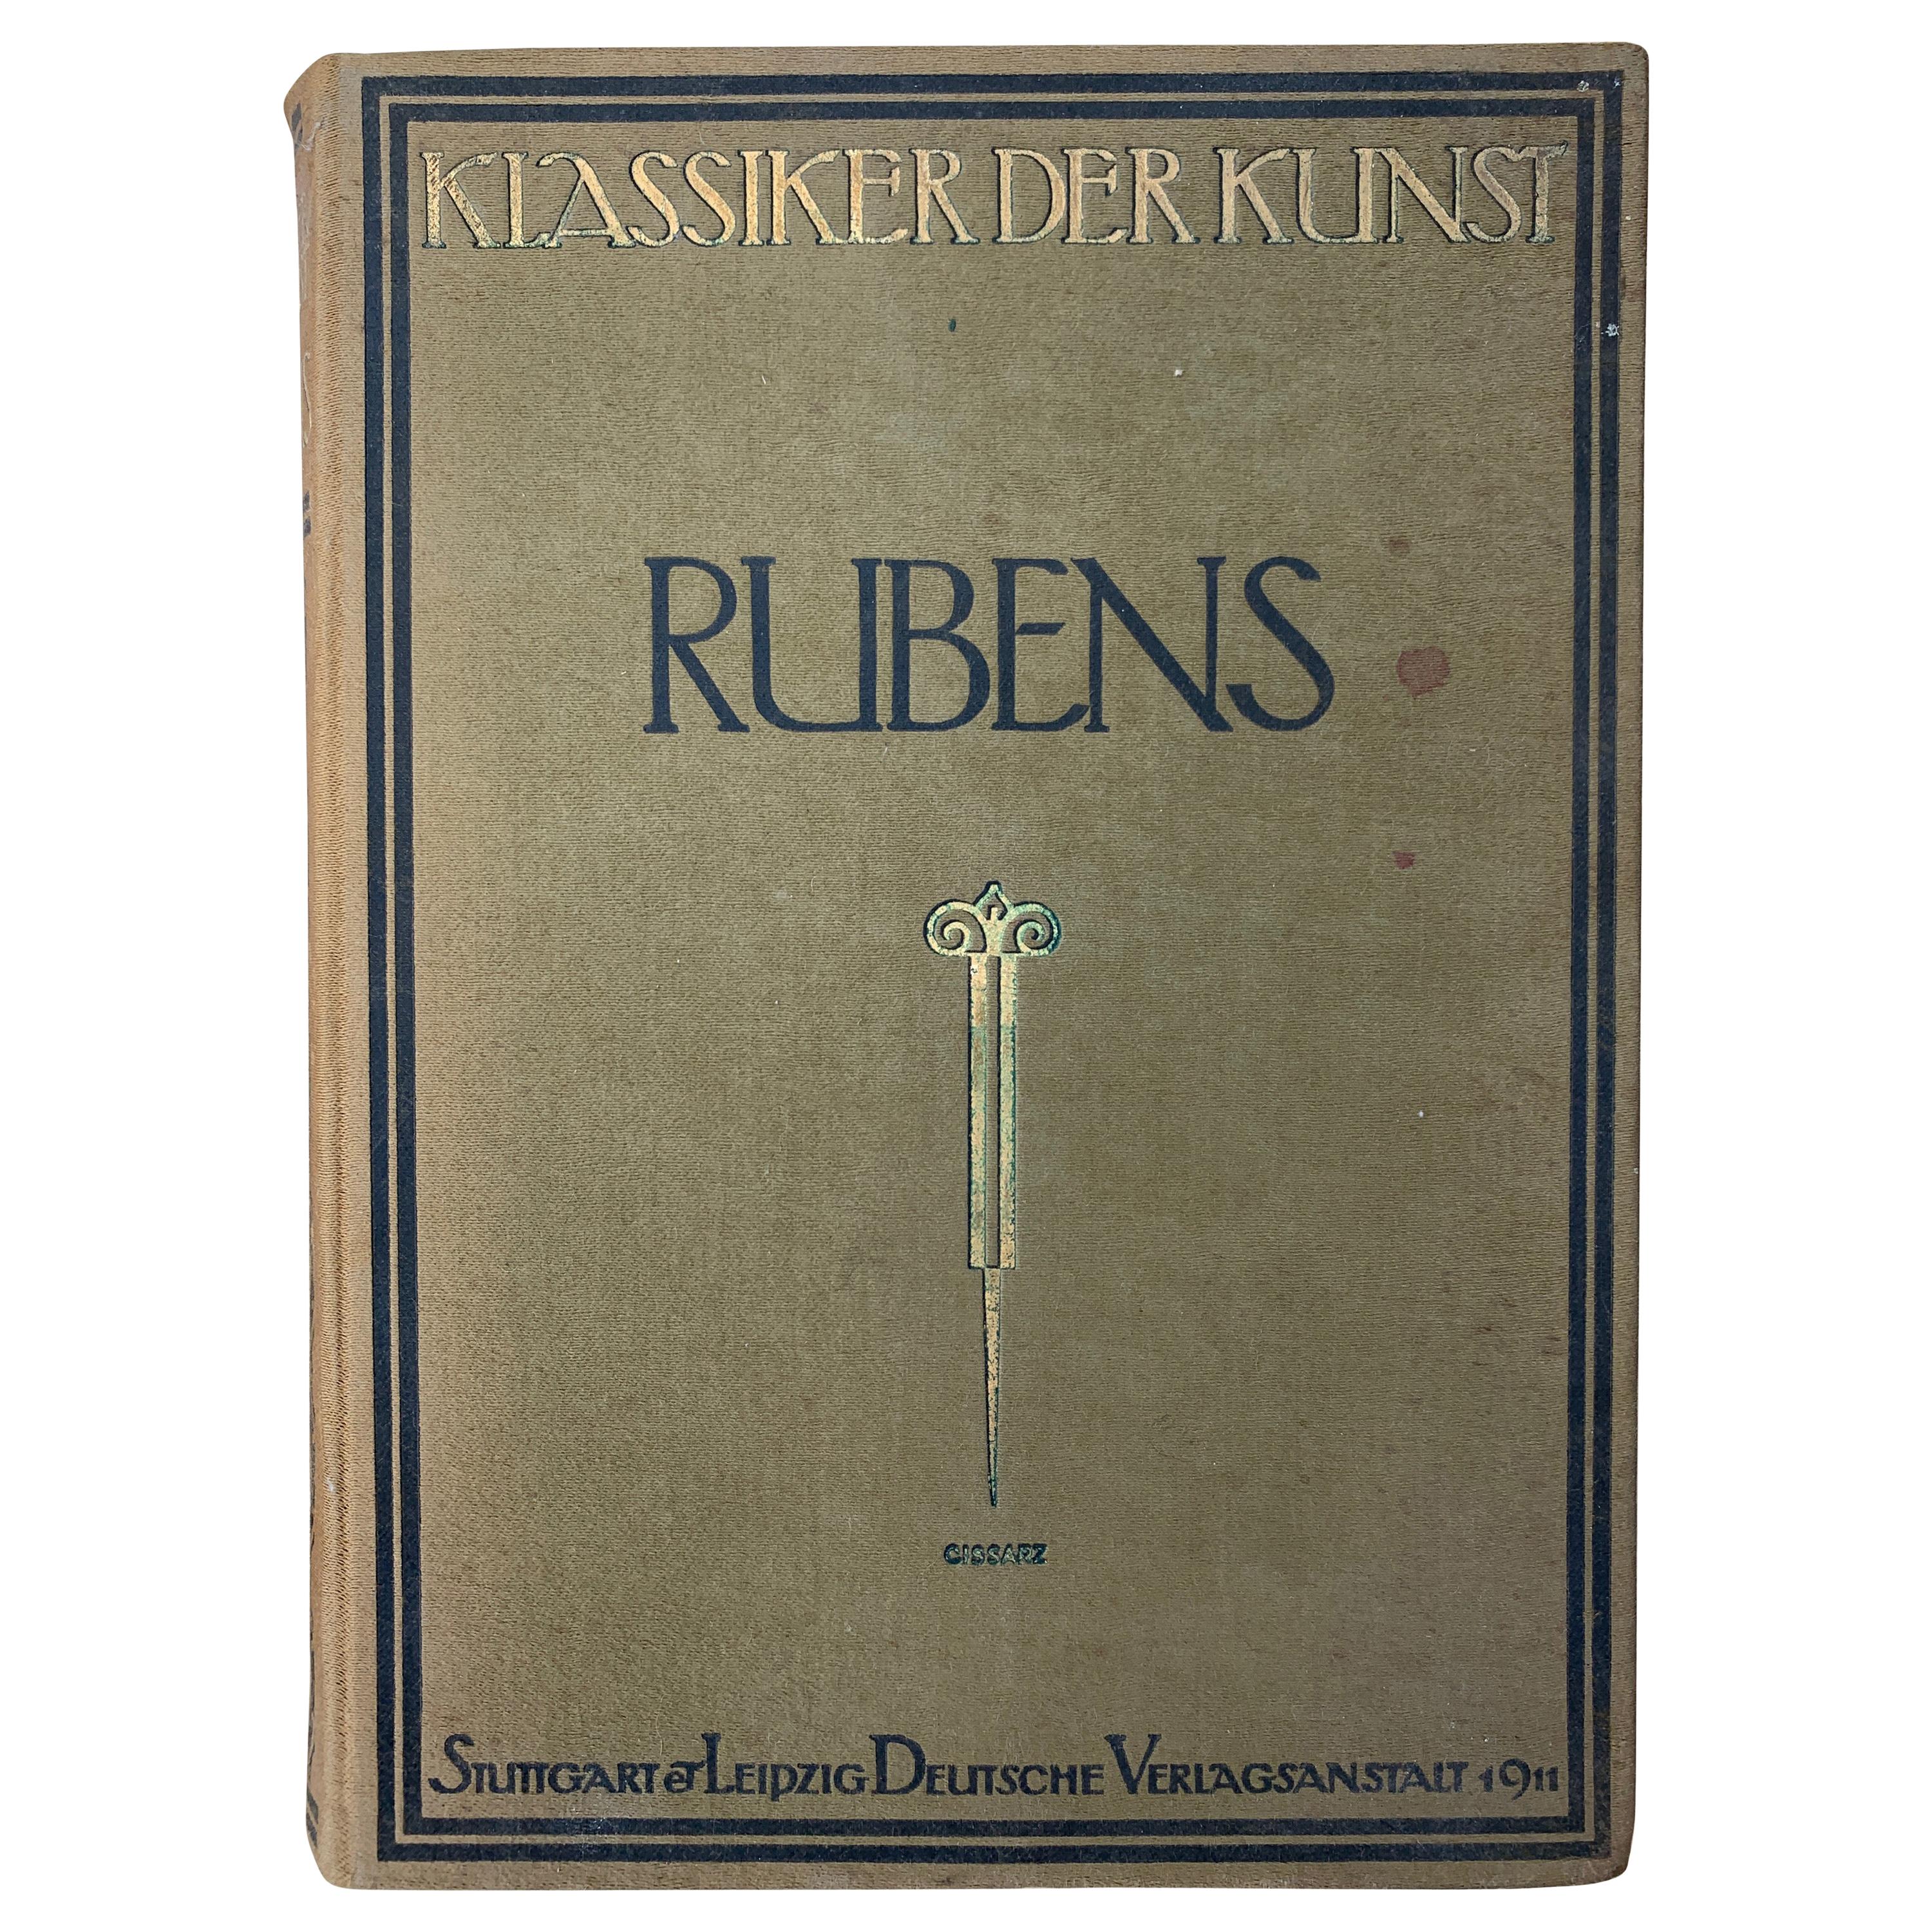 The Works of P.P.Rubens, 551 Illustrations, Adolf Rosenberg, Leipzig, 1911